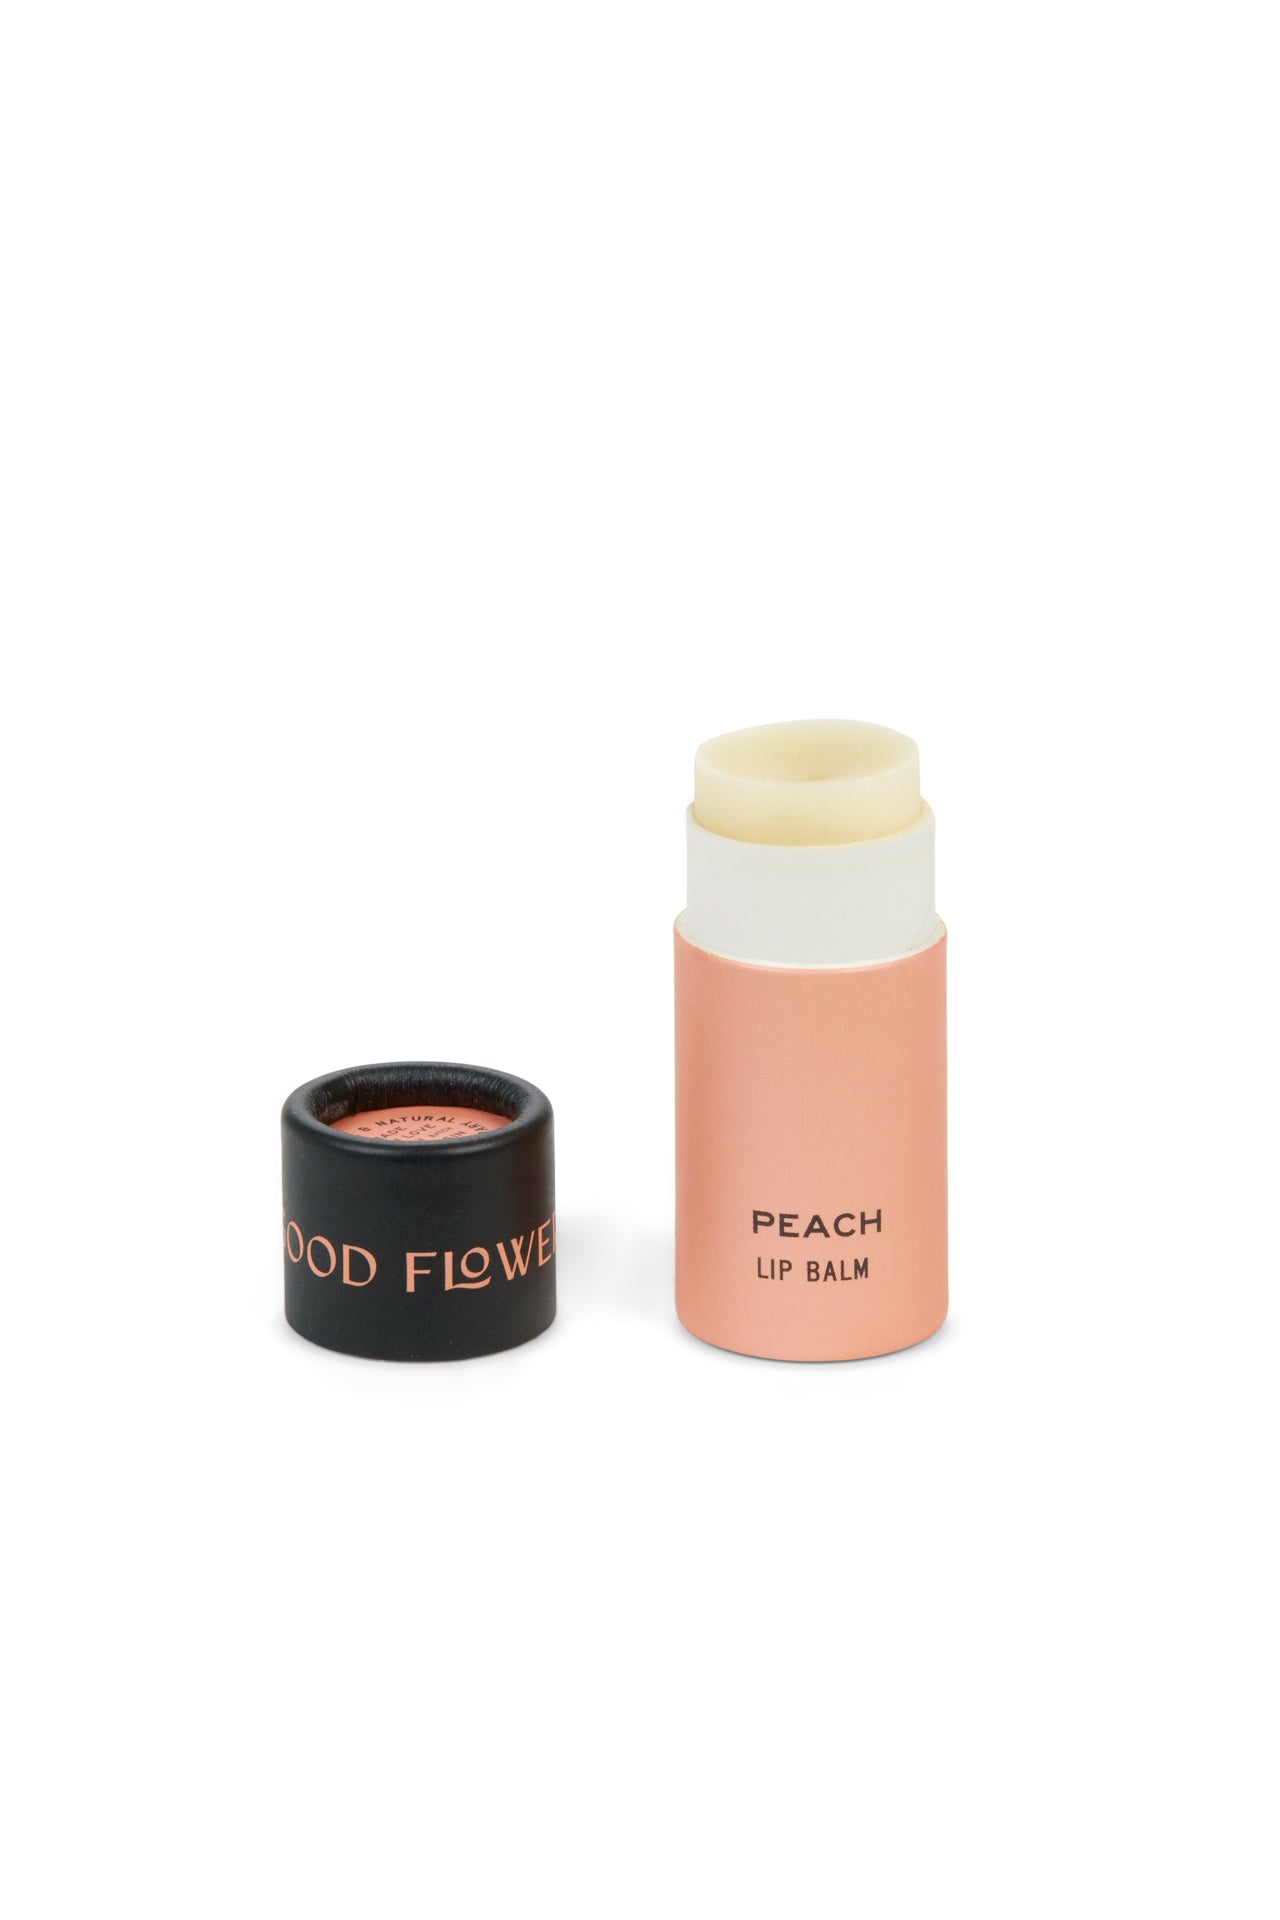 Peach Lip Balm / 0.3 oz Biodegradable Plastic-Free Tube